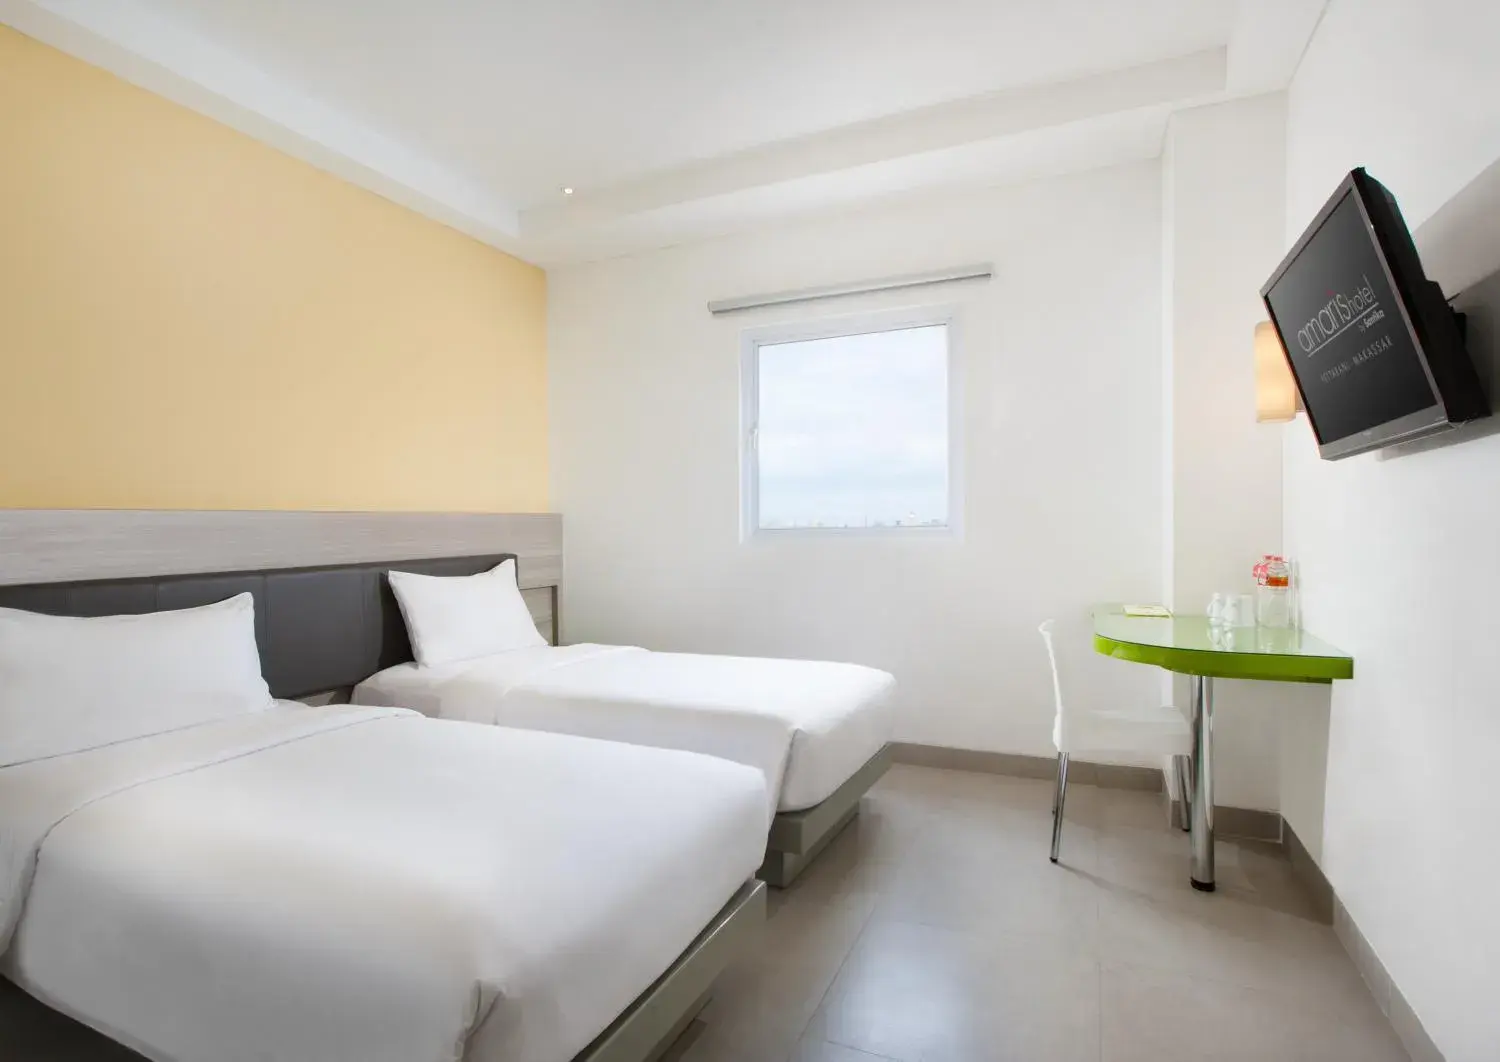 Bed, Room Photo in Amaris Hotel Pettarani